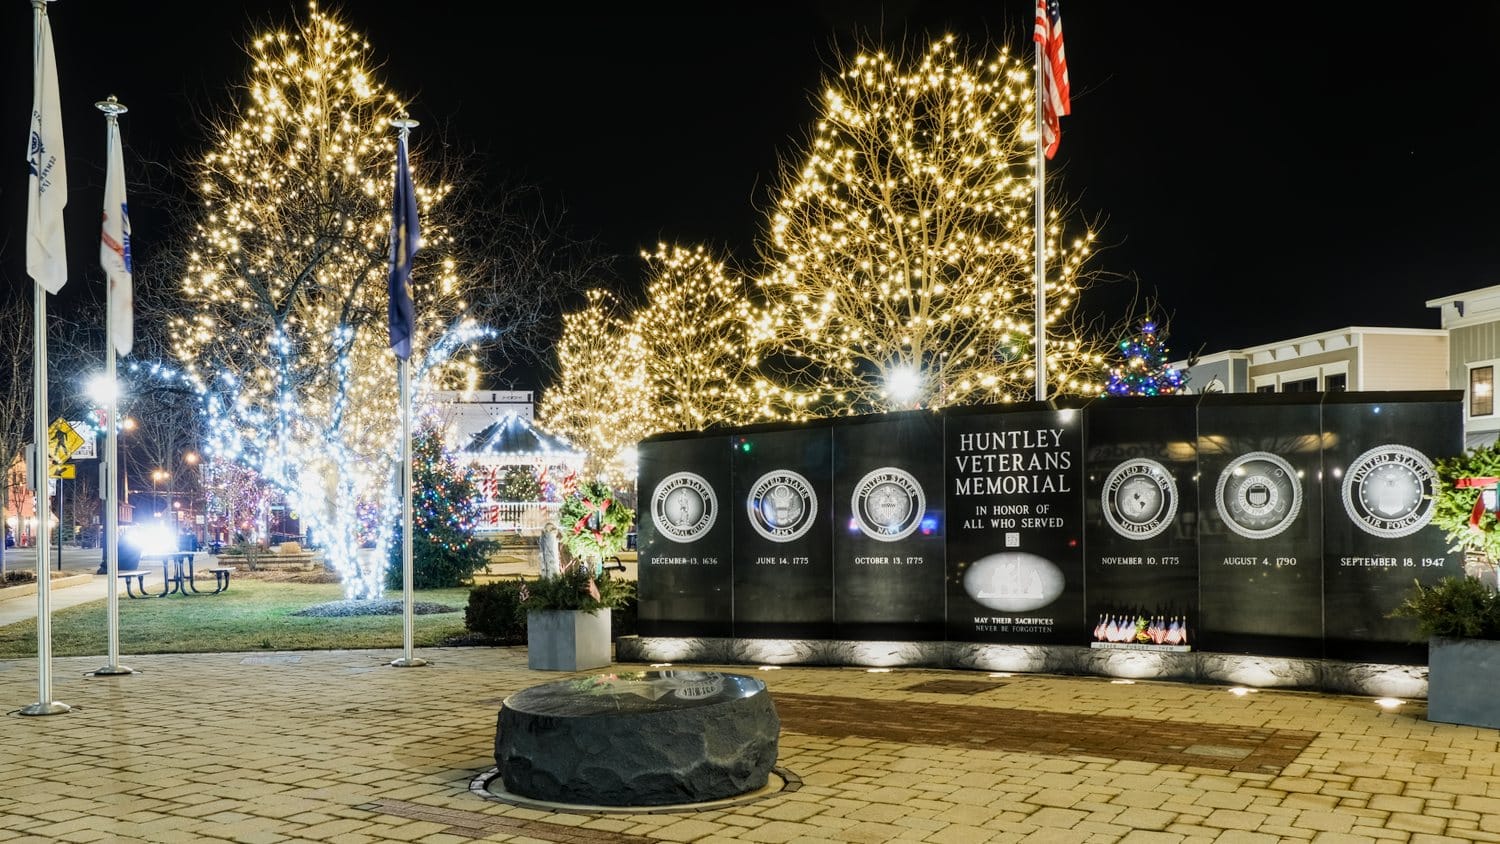 Huntley Veterans Memorial surrounded by Christmas lighting.